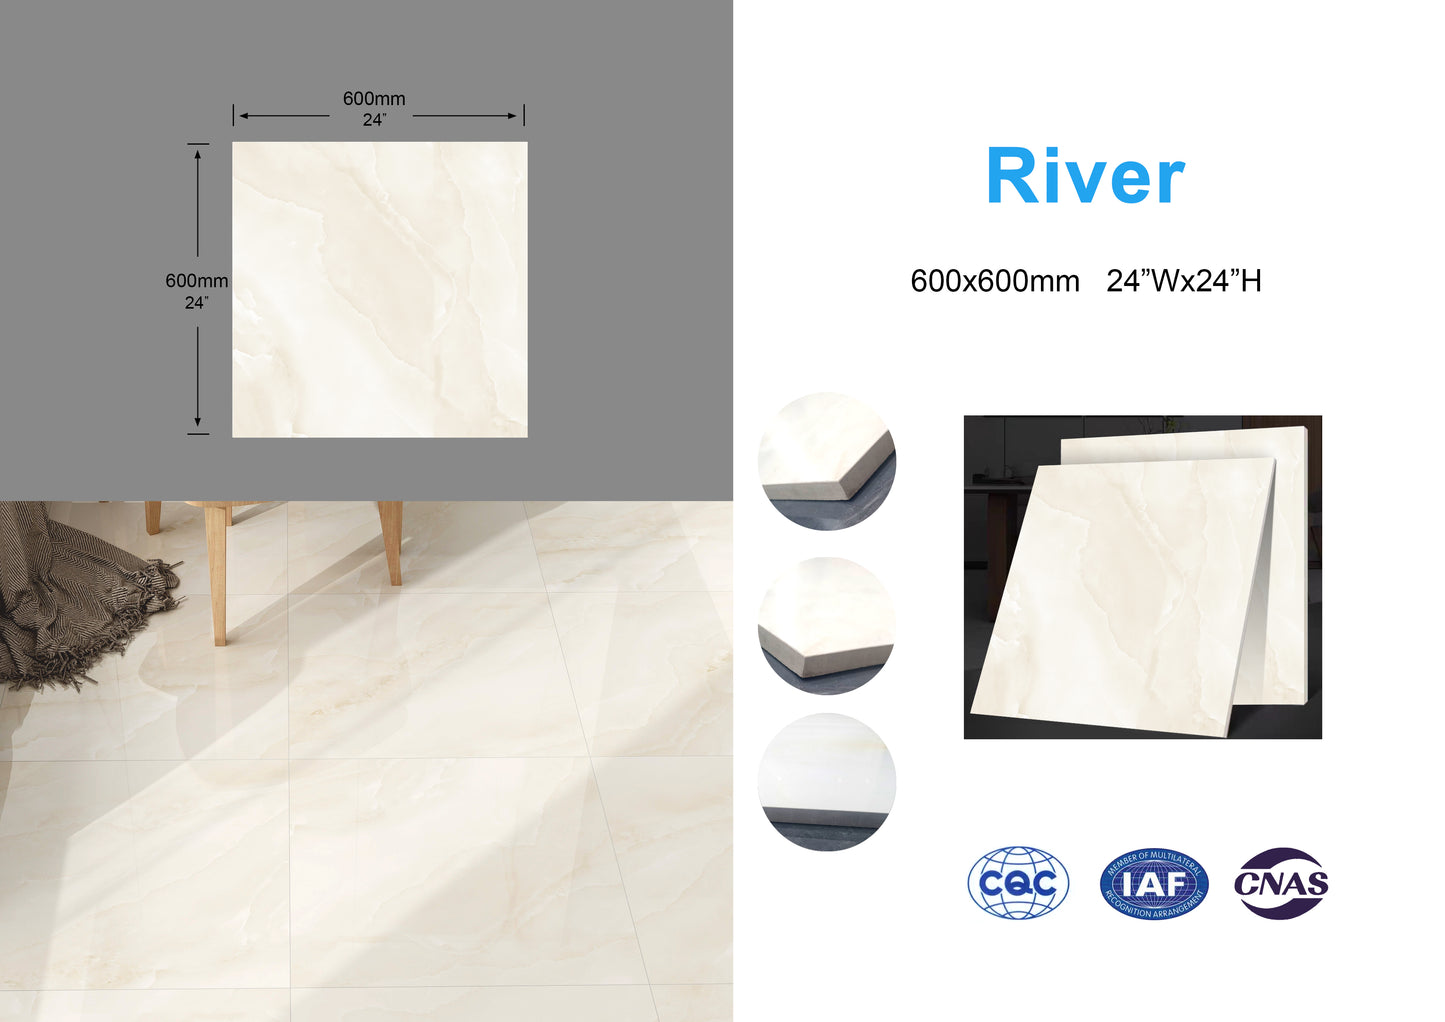 River family Full Polished Glazed Tile 24"x24" 4pcs/box 16sf/box $22.24/box $1.39/sf (15 days return/exchange) Bulk Deal 1000sf+ $1.19/SF(No return/no exchange)